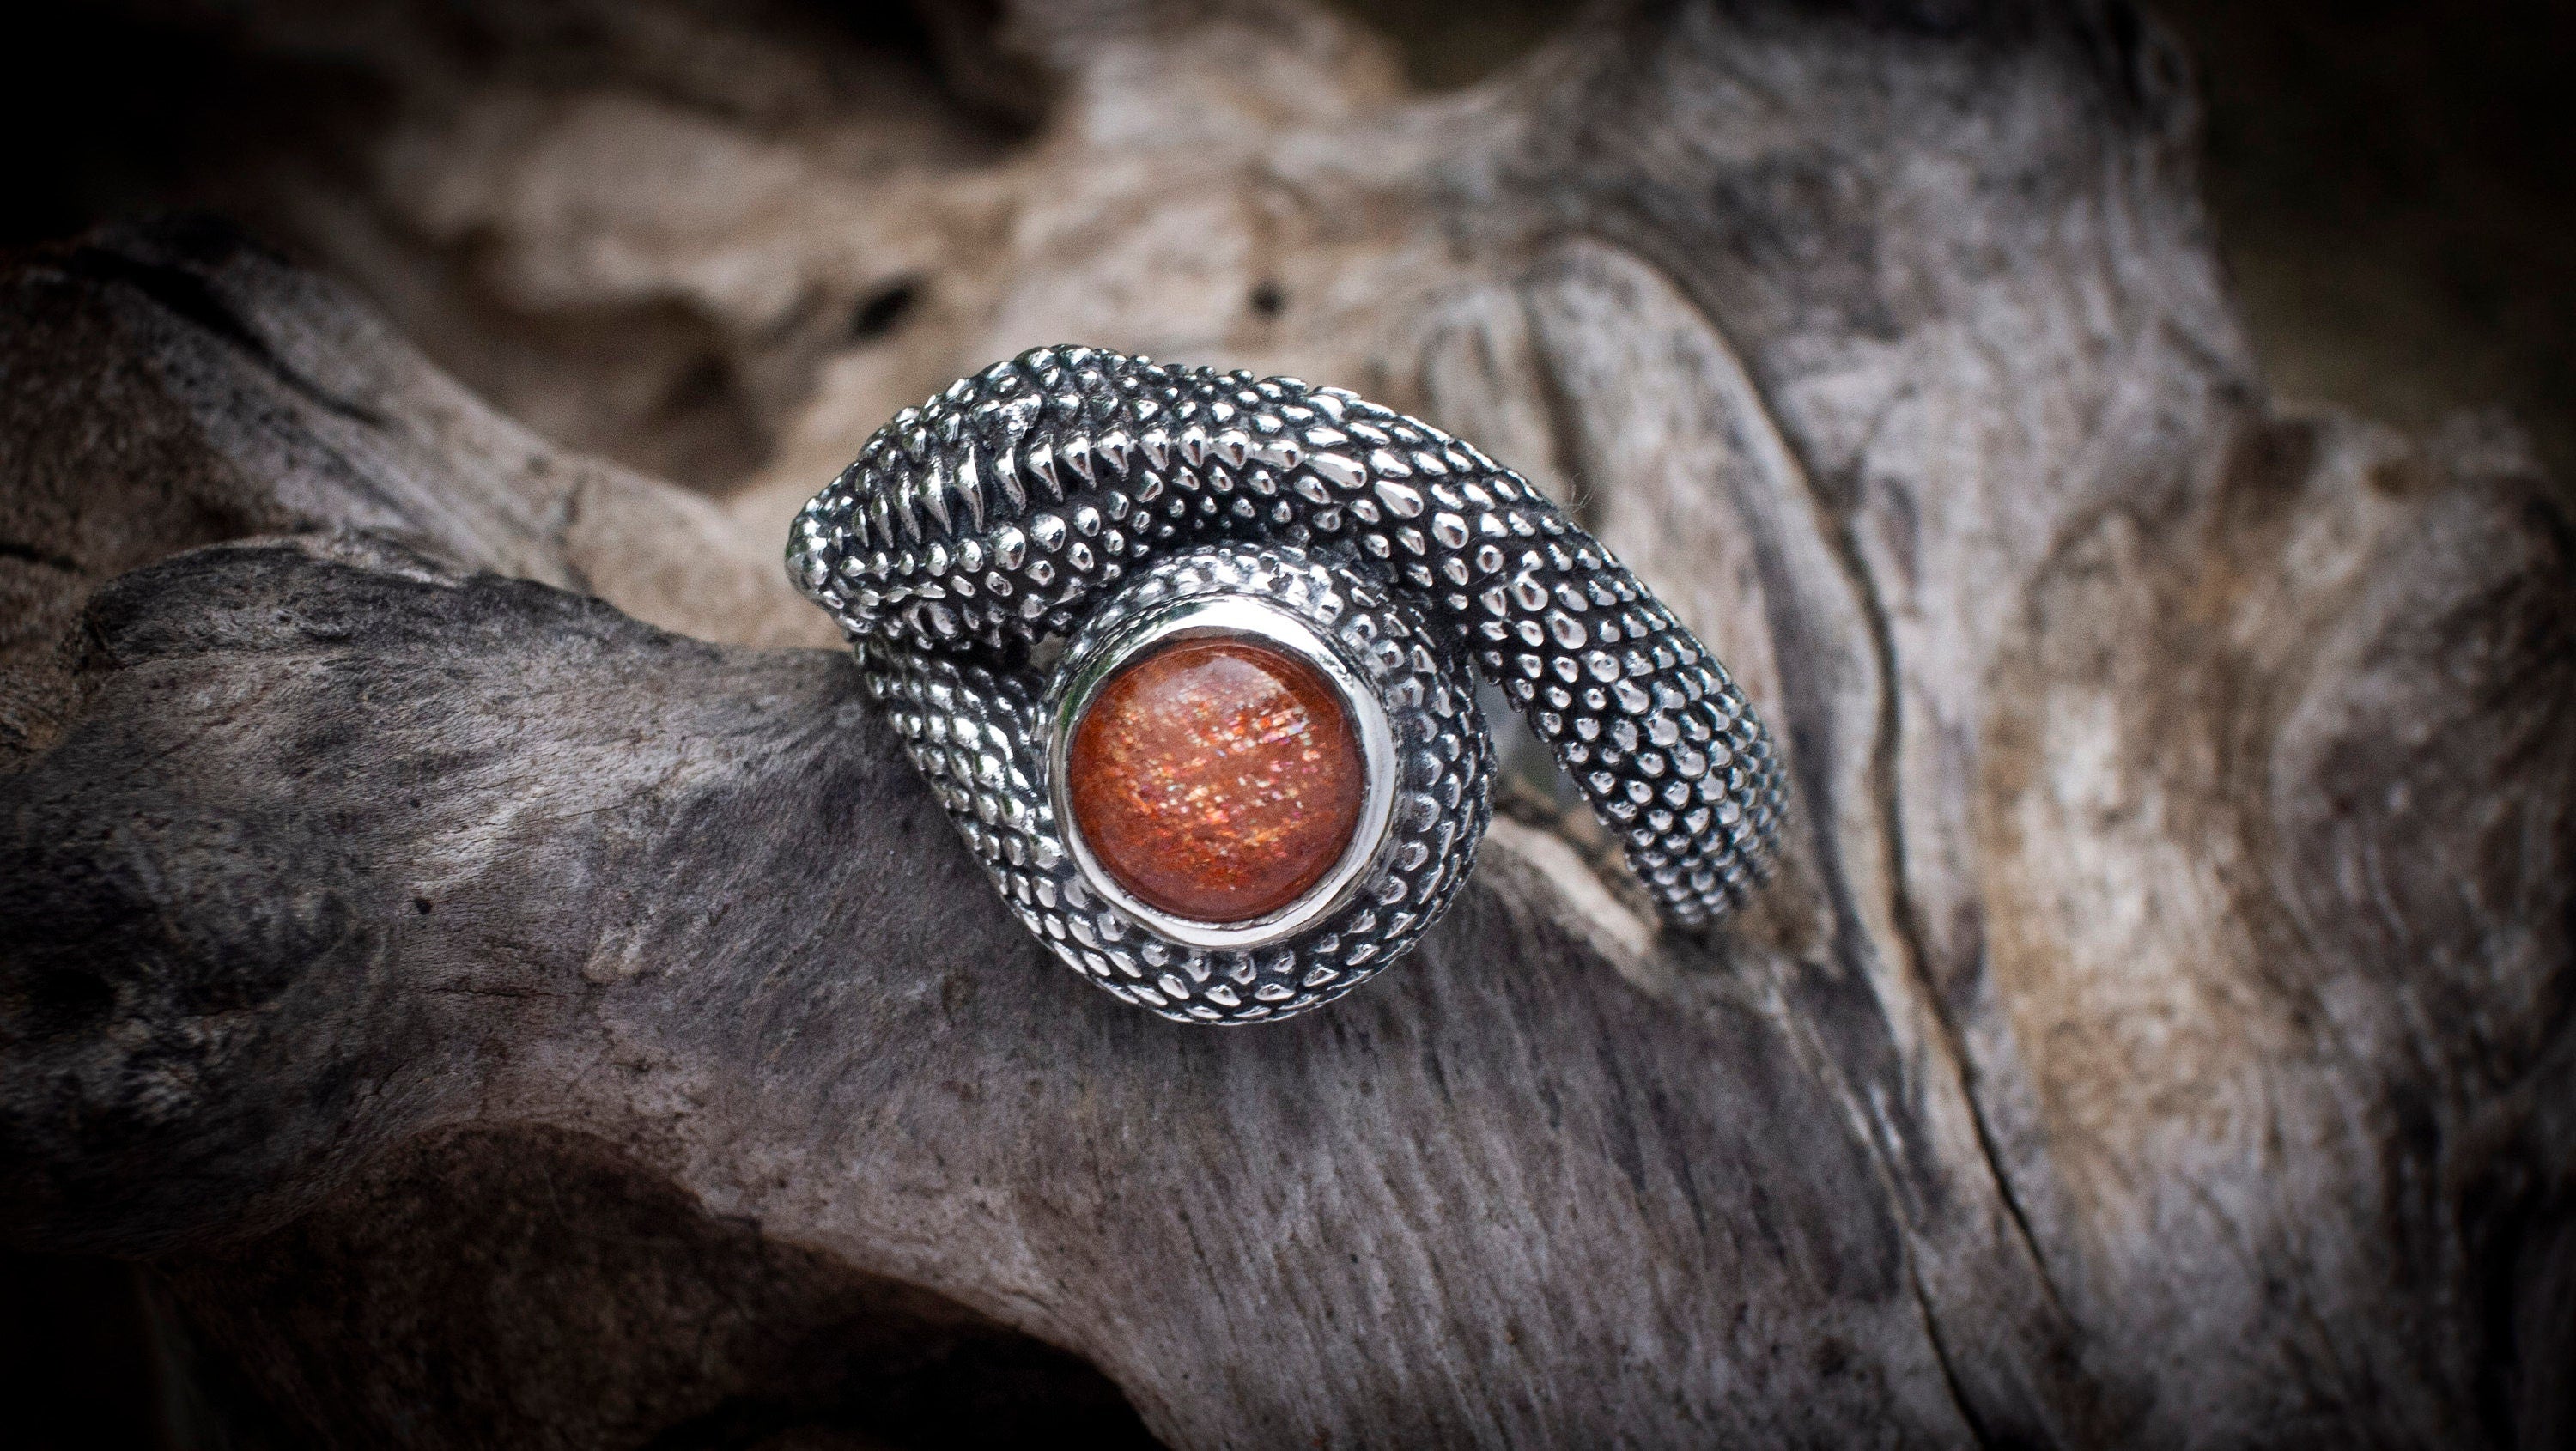 Snake ring with gemstone